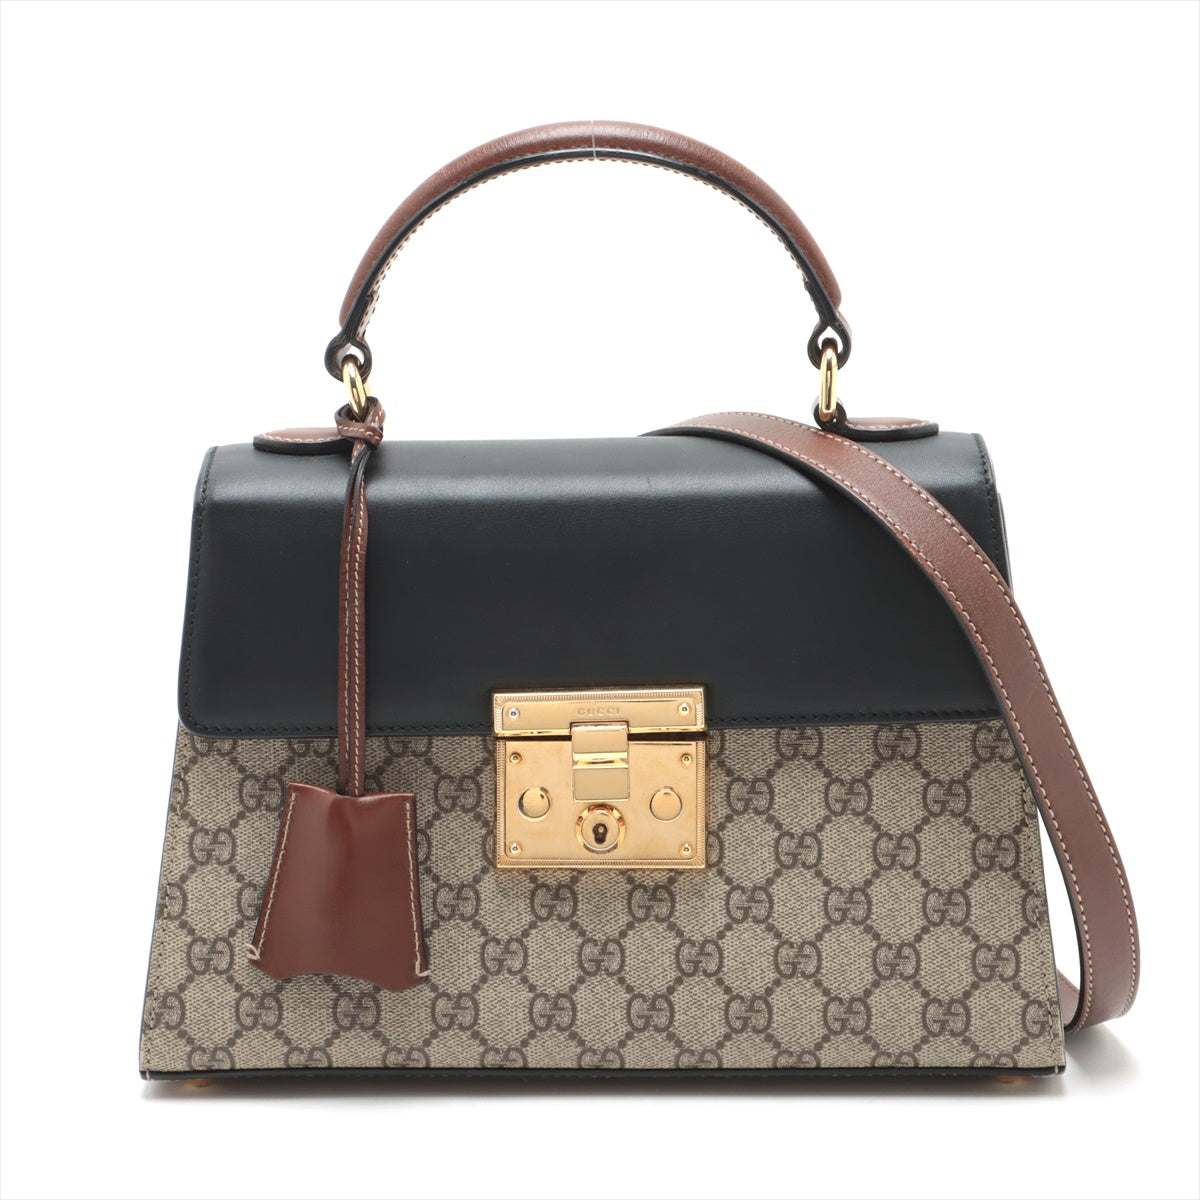 Gucci GG Supreme Padlock 2way handbag Beige 453188